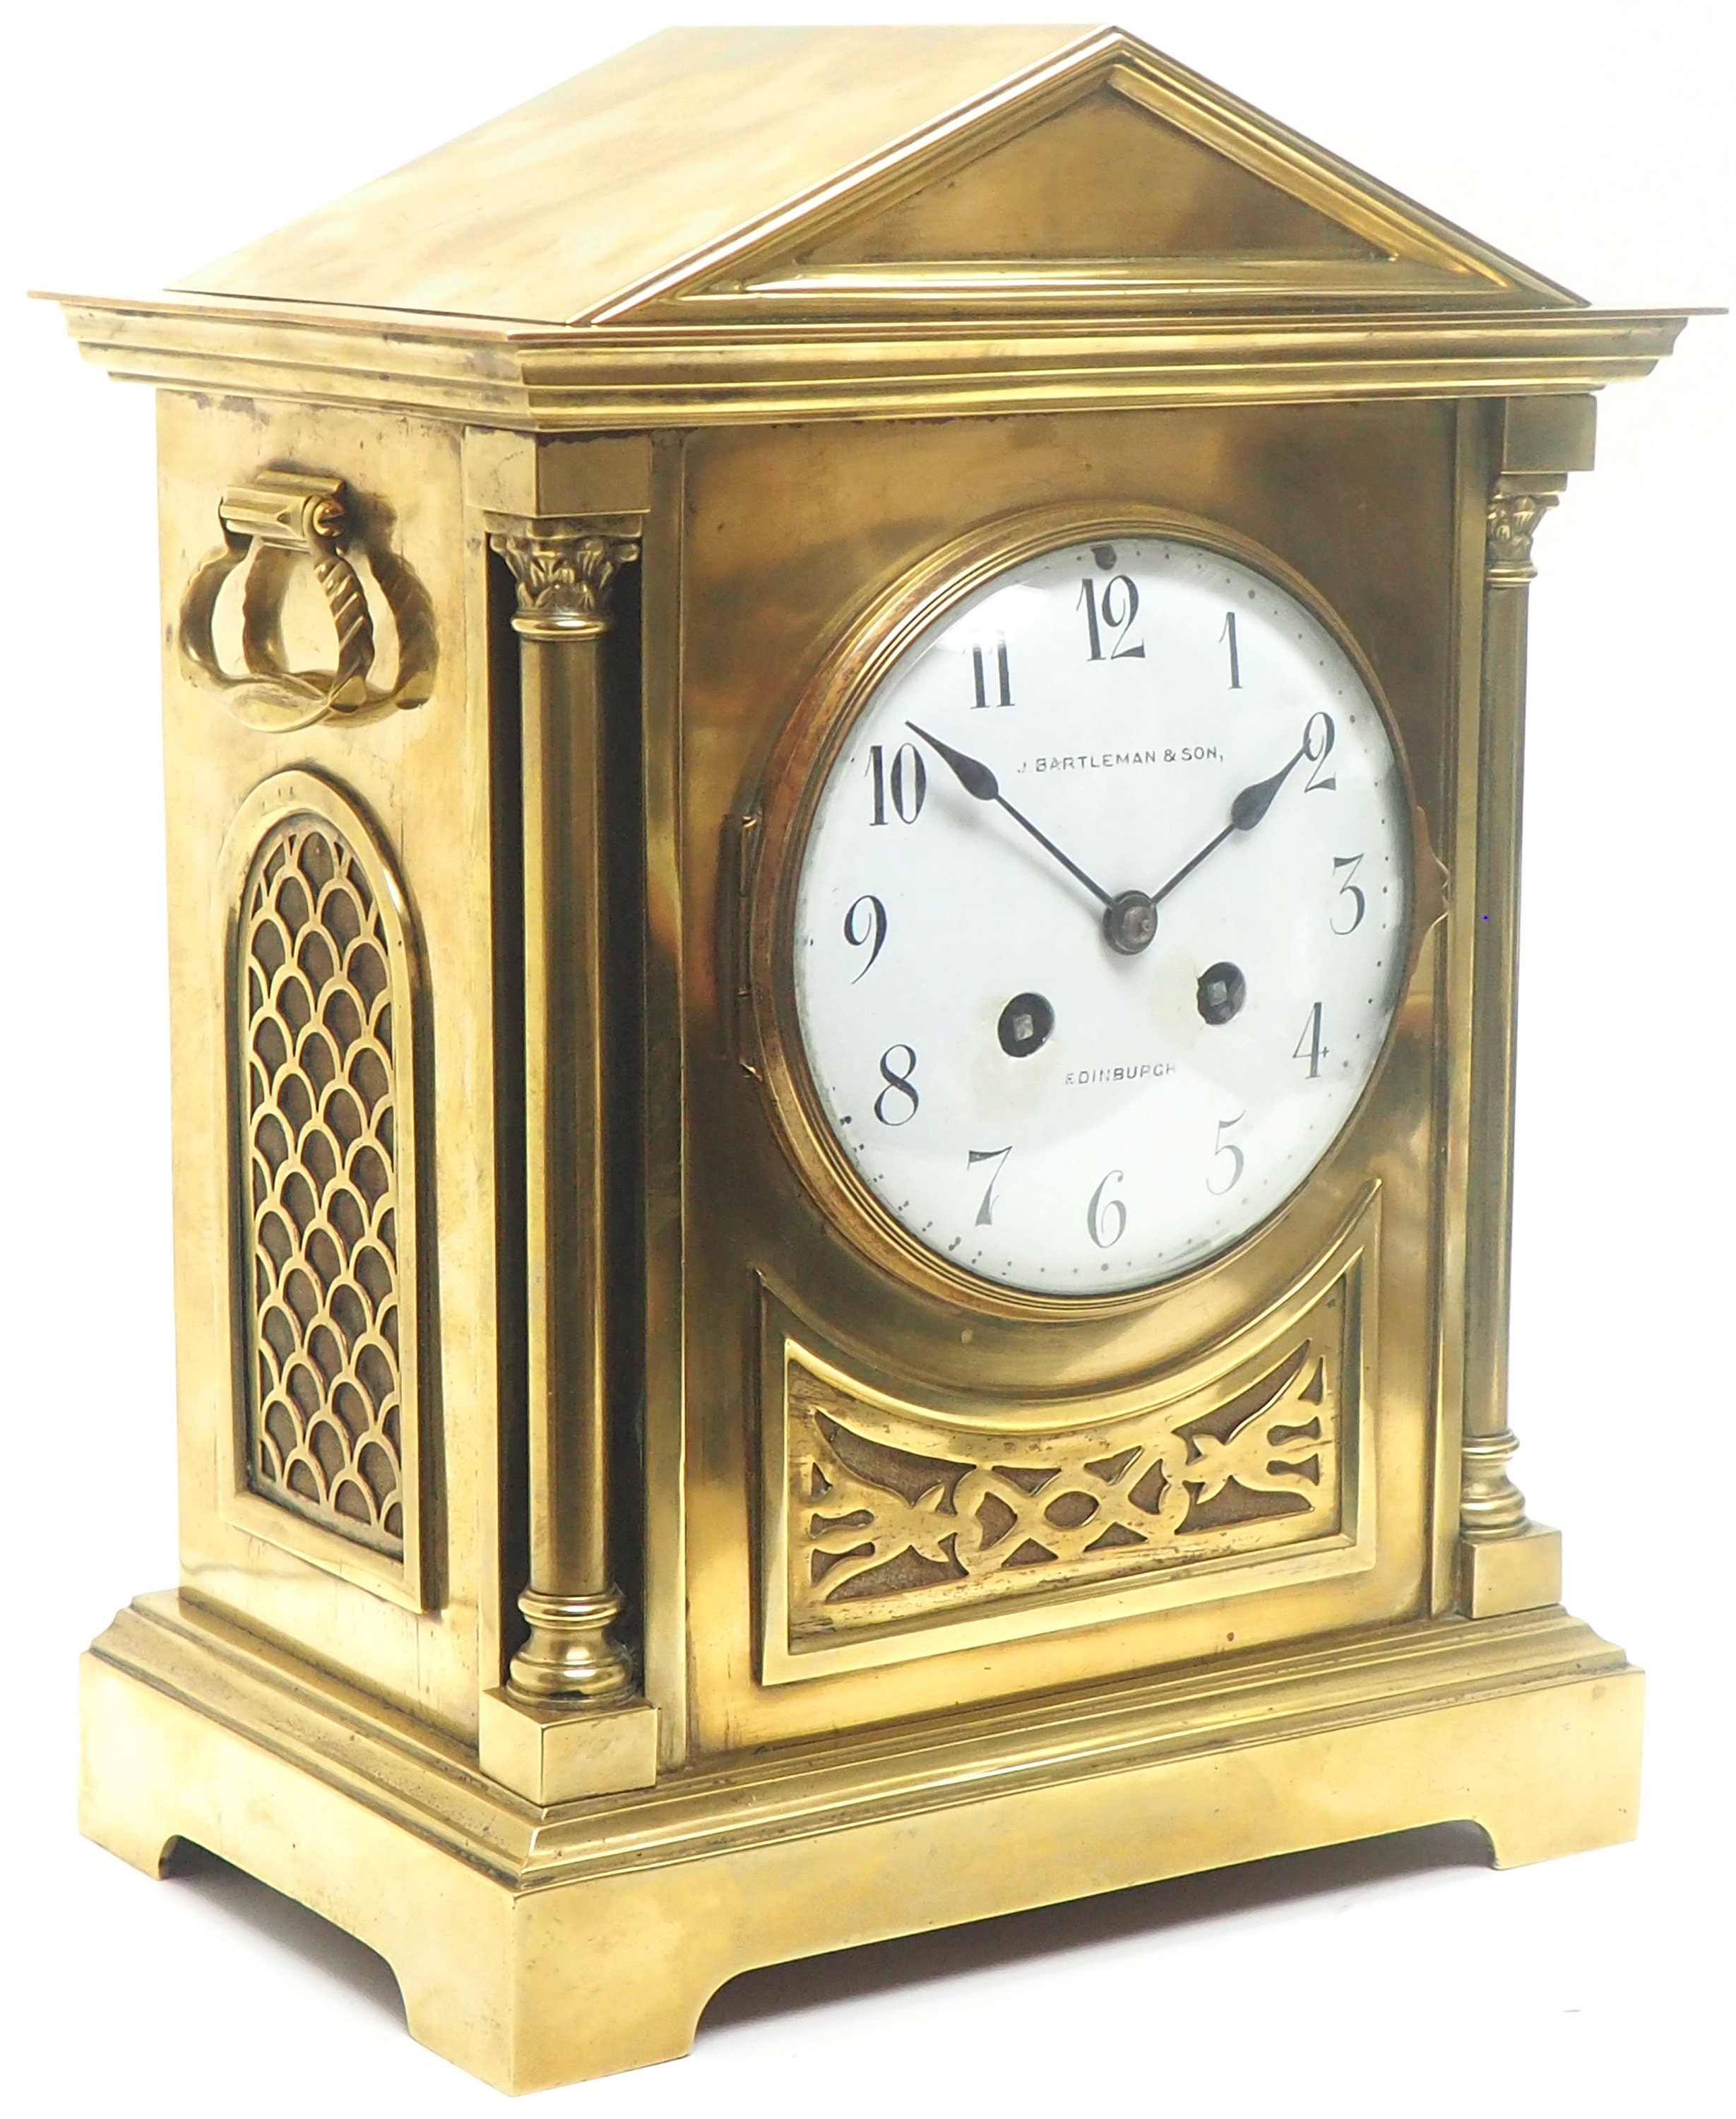 4 Metal ormolu corners For mantle clock or furniture decorations #3 